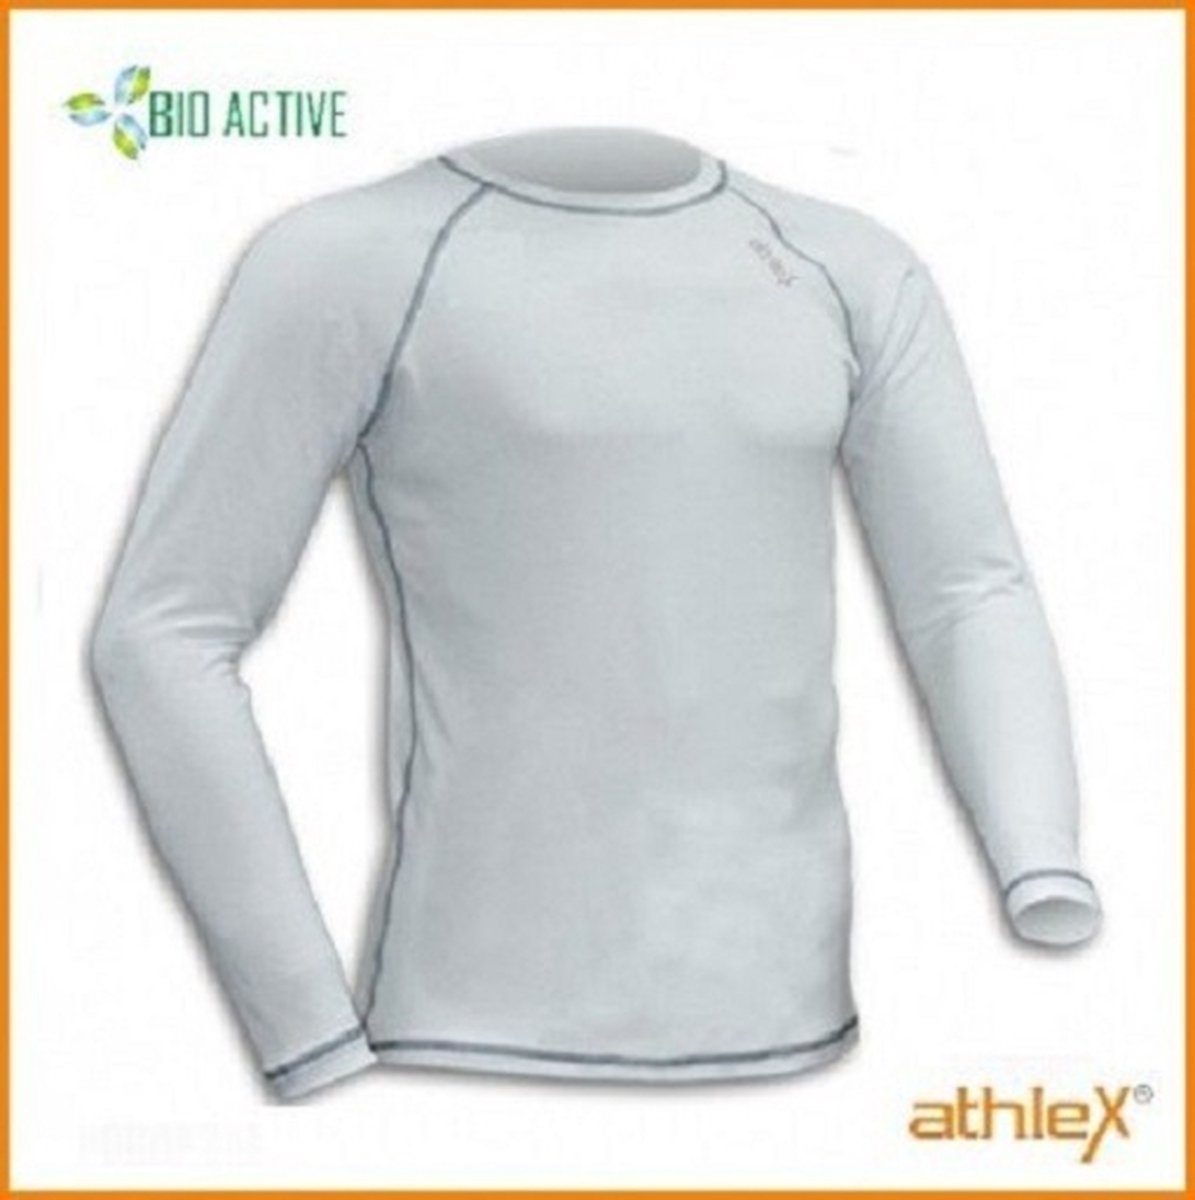 Athlex Bio Active Shirt lange mouw M Wit